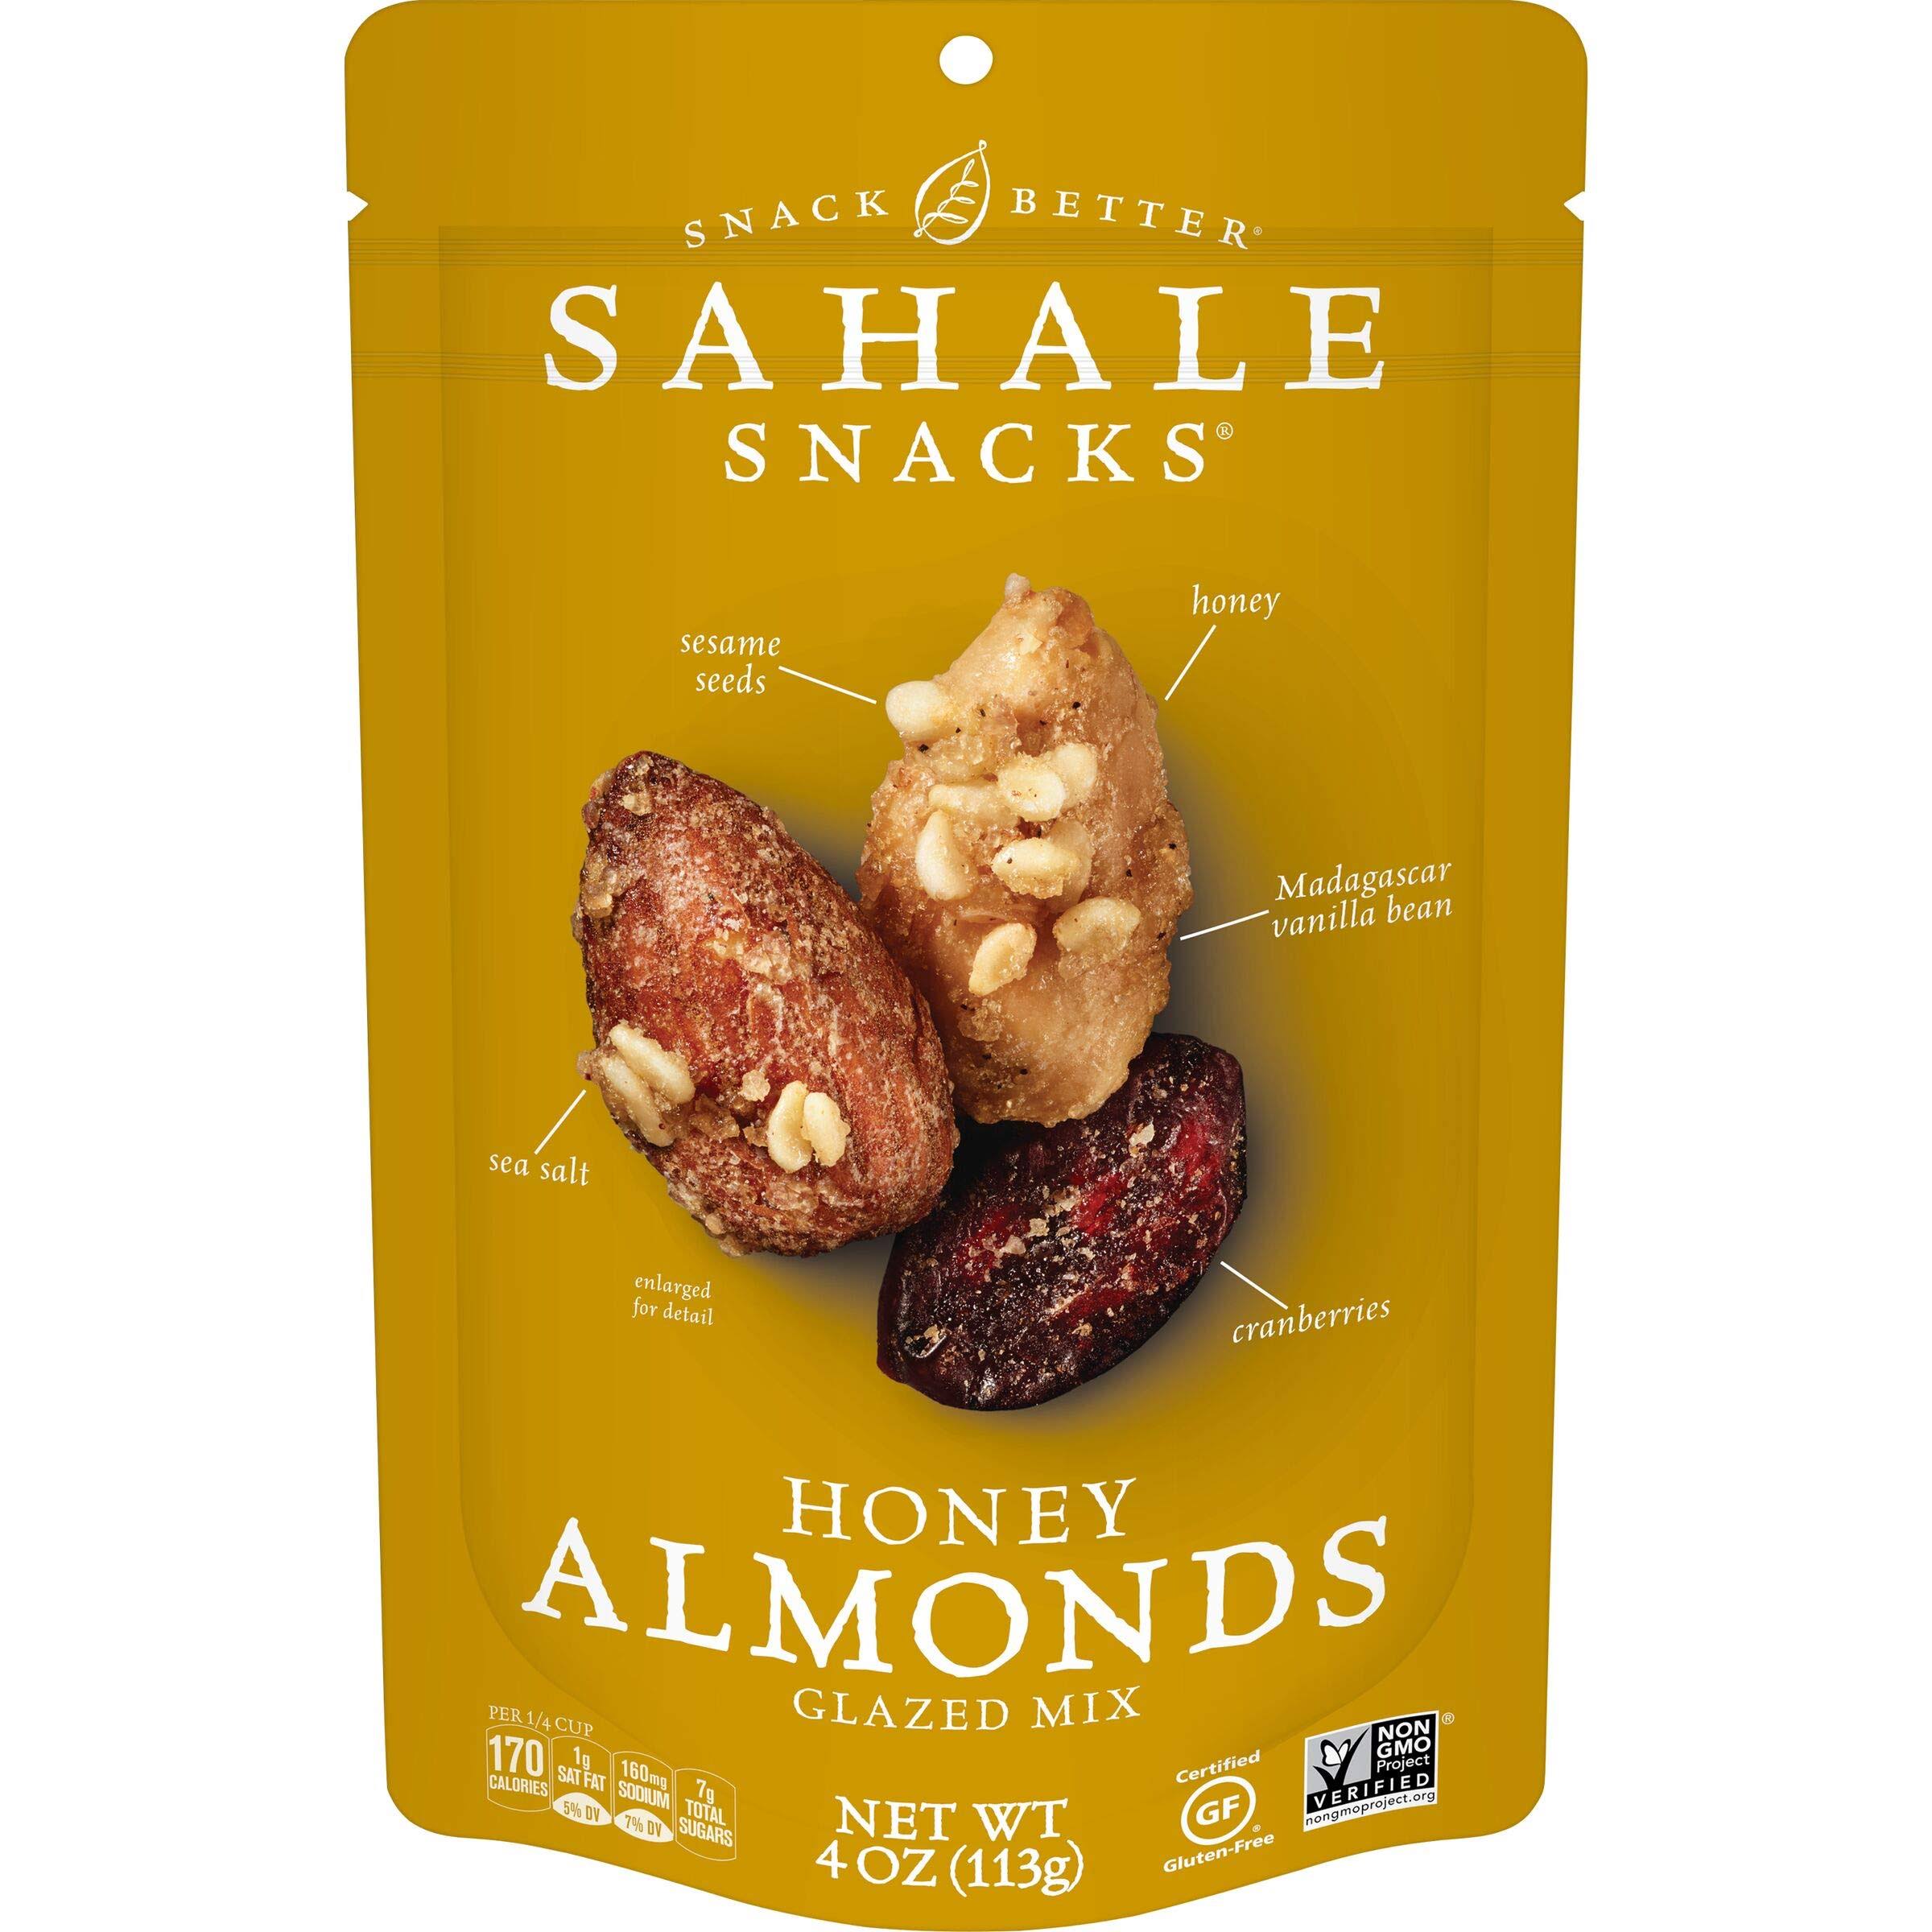 Sahale Snacks Glazed Nuts Almonds - with Cranberries, Honey and Sea Salt, 4oz